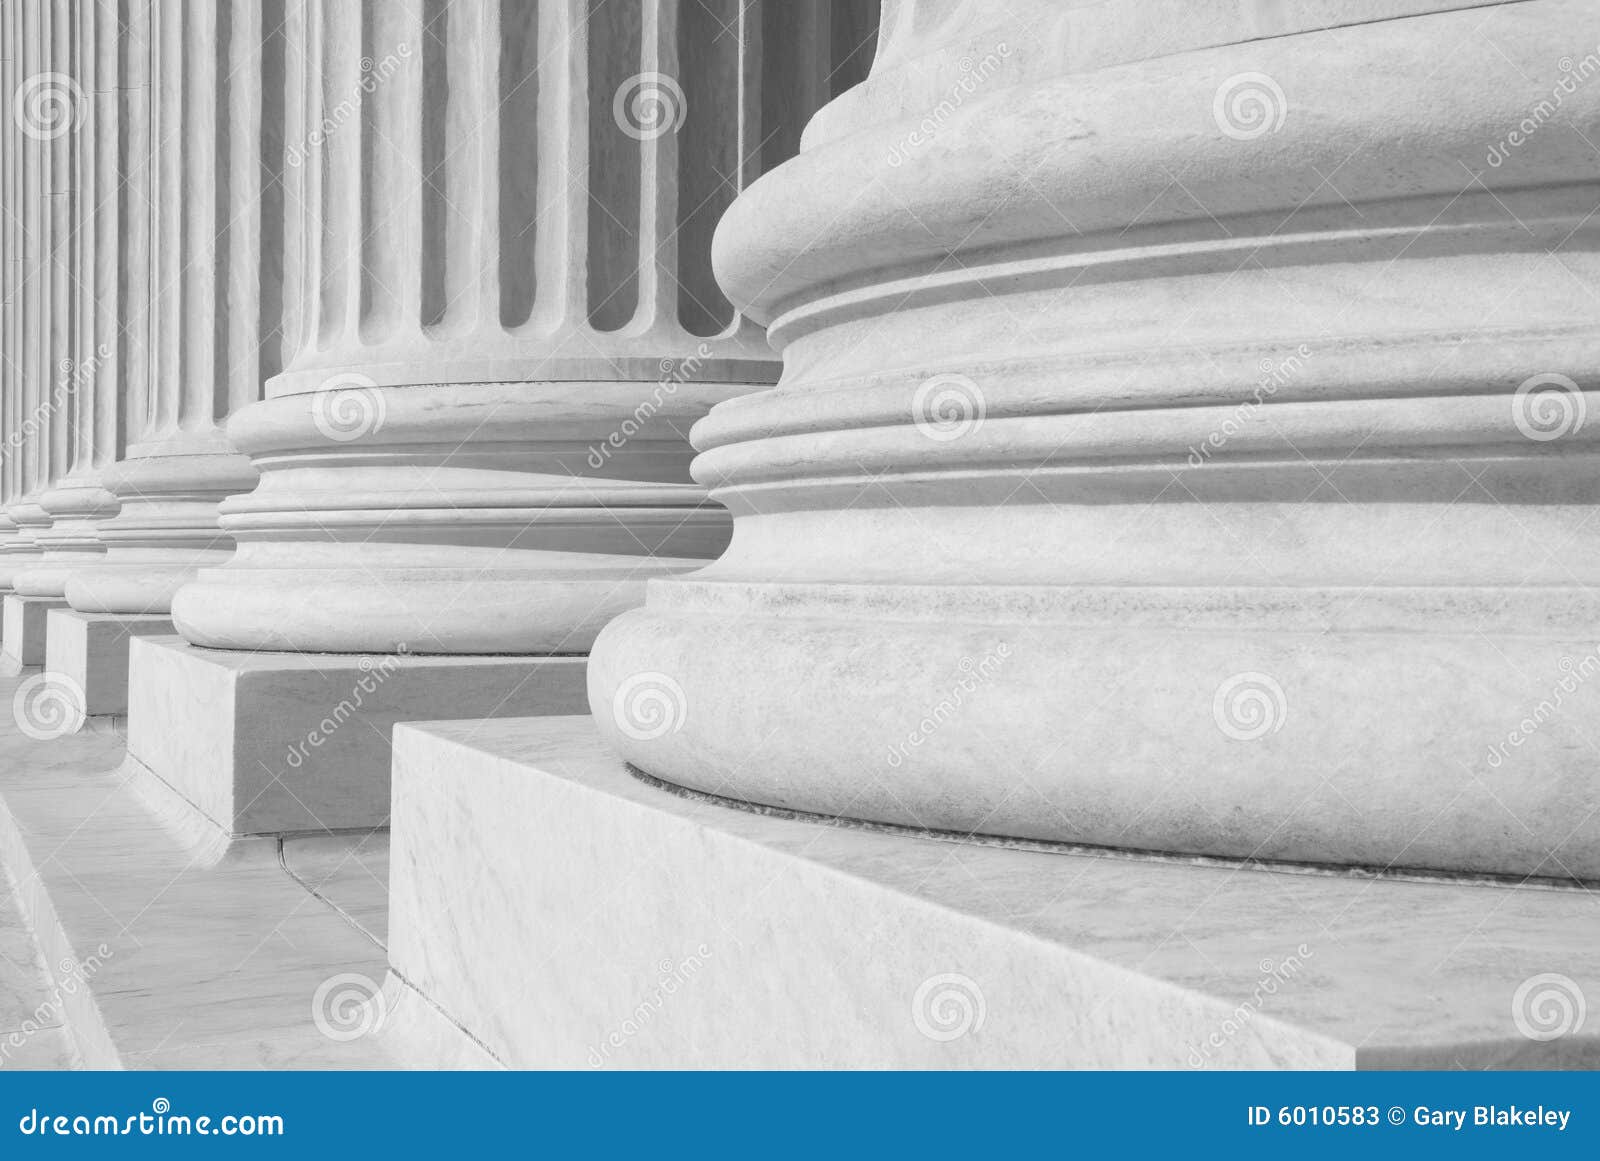 us supreme court - columns